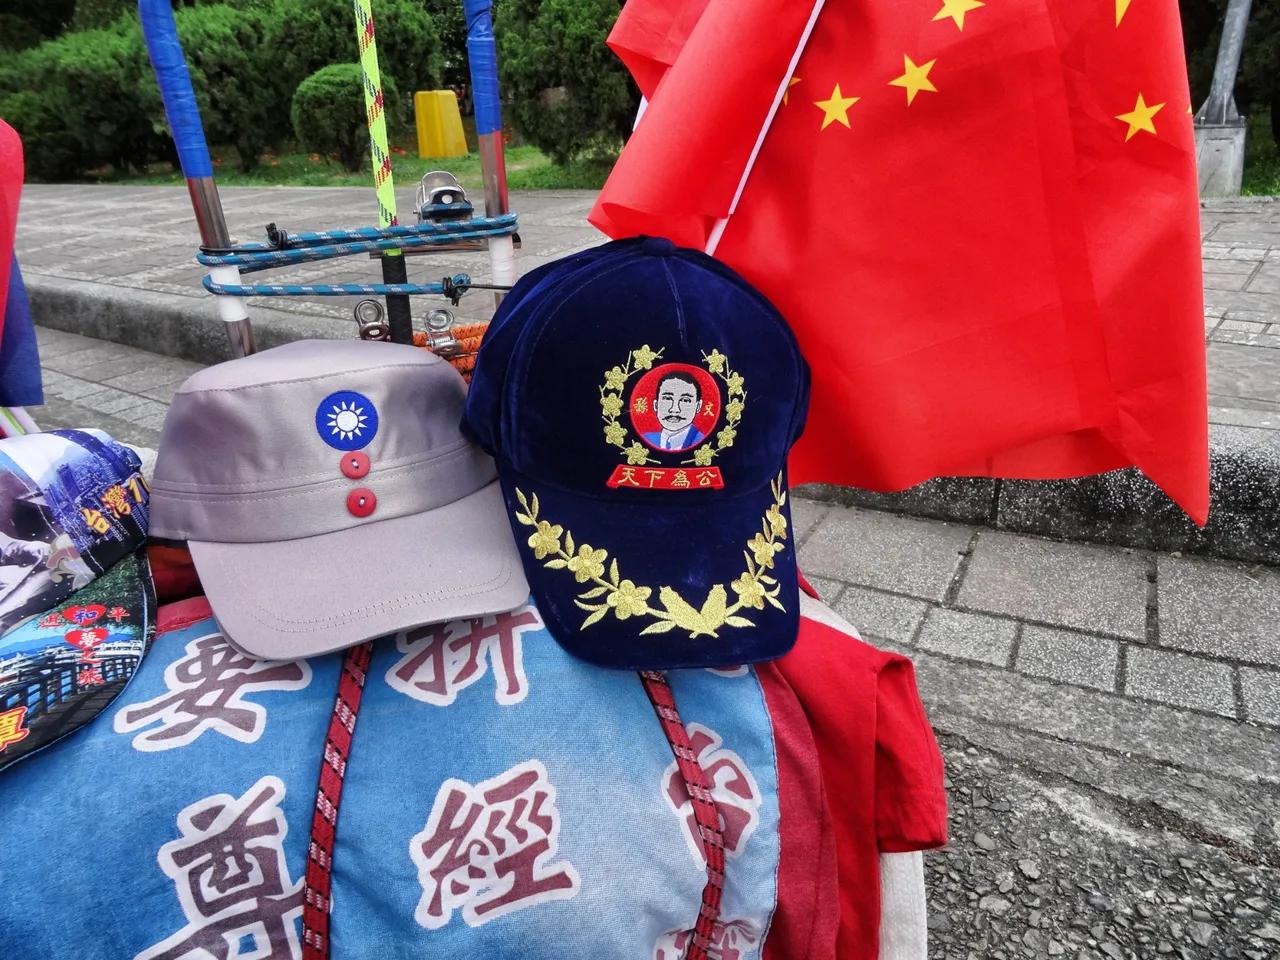 Caps in the name of Chiang Kai-shek